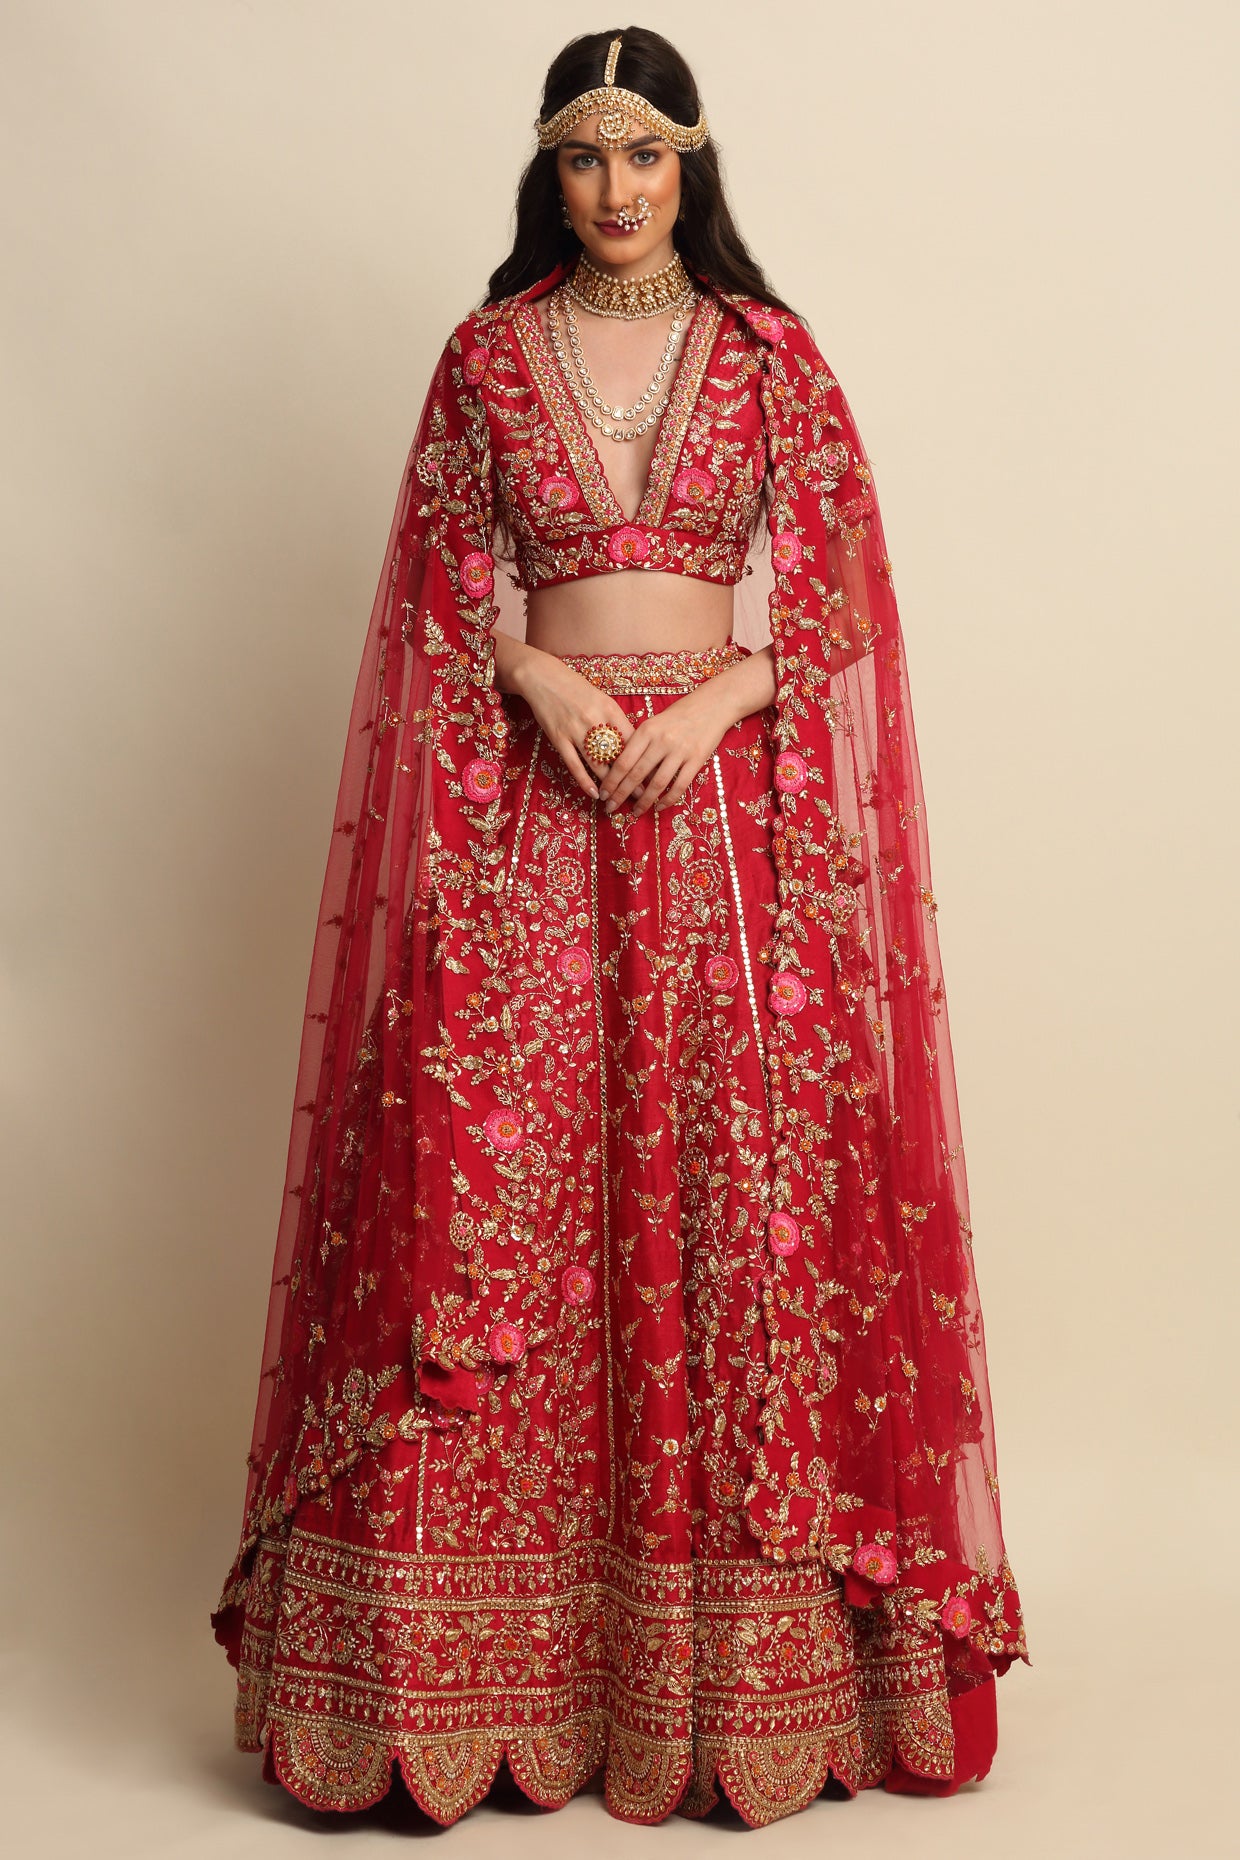 Top 10 trending ethnic Design post | Bridal lehenga collection, Wedding  lehenga designs, Indian wedding gowns